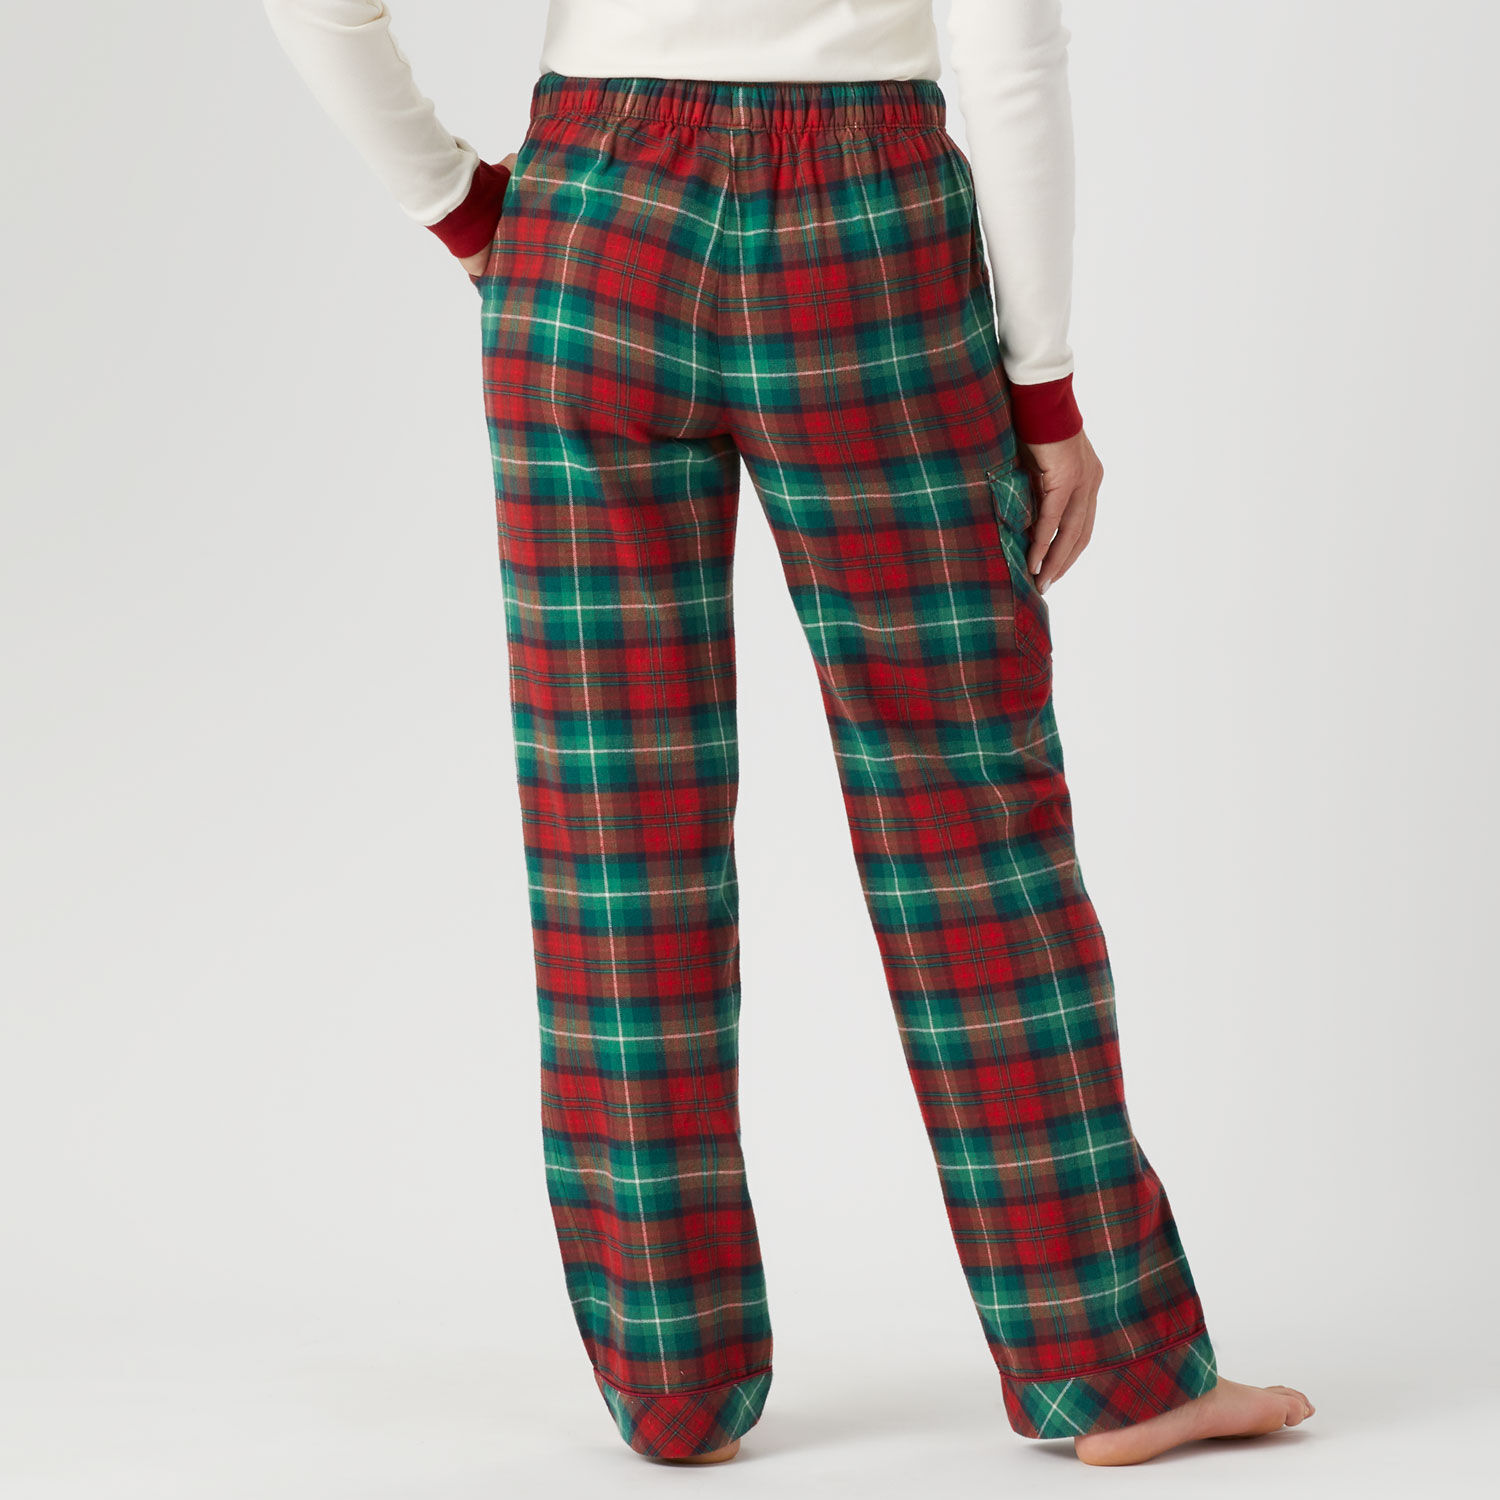 Evolve Women's Pajama Set Cotton | Tshirt Pyjama Set for Women Night Wear  for Daily Use